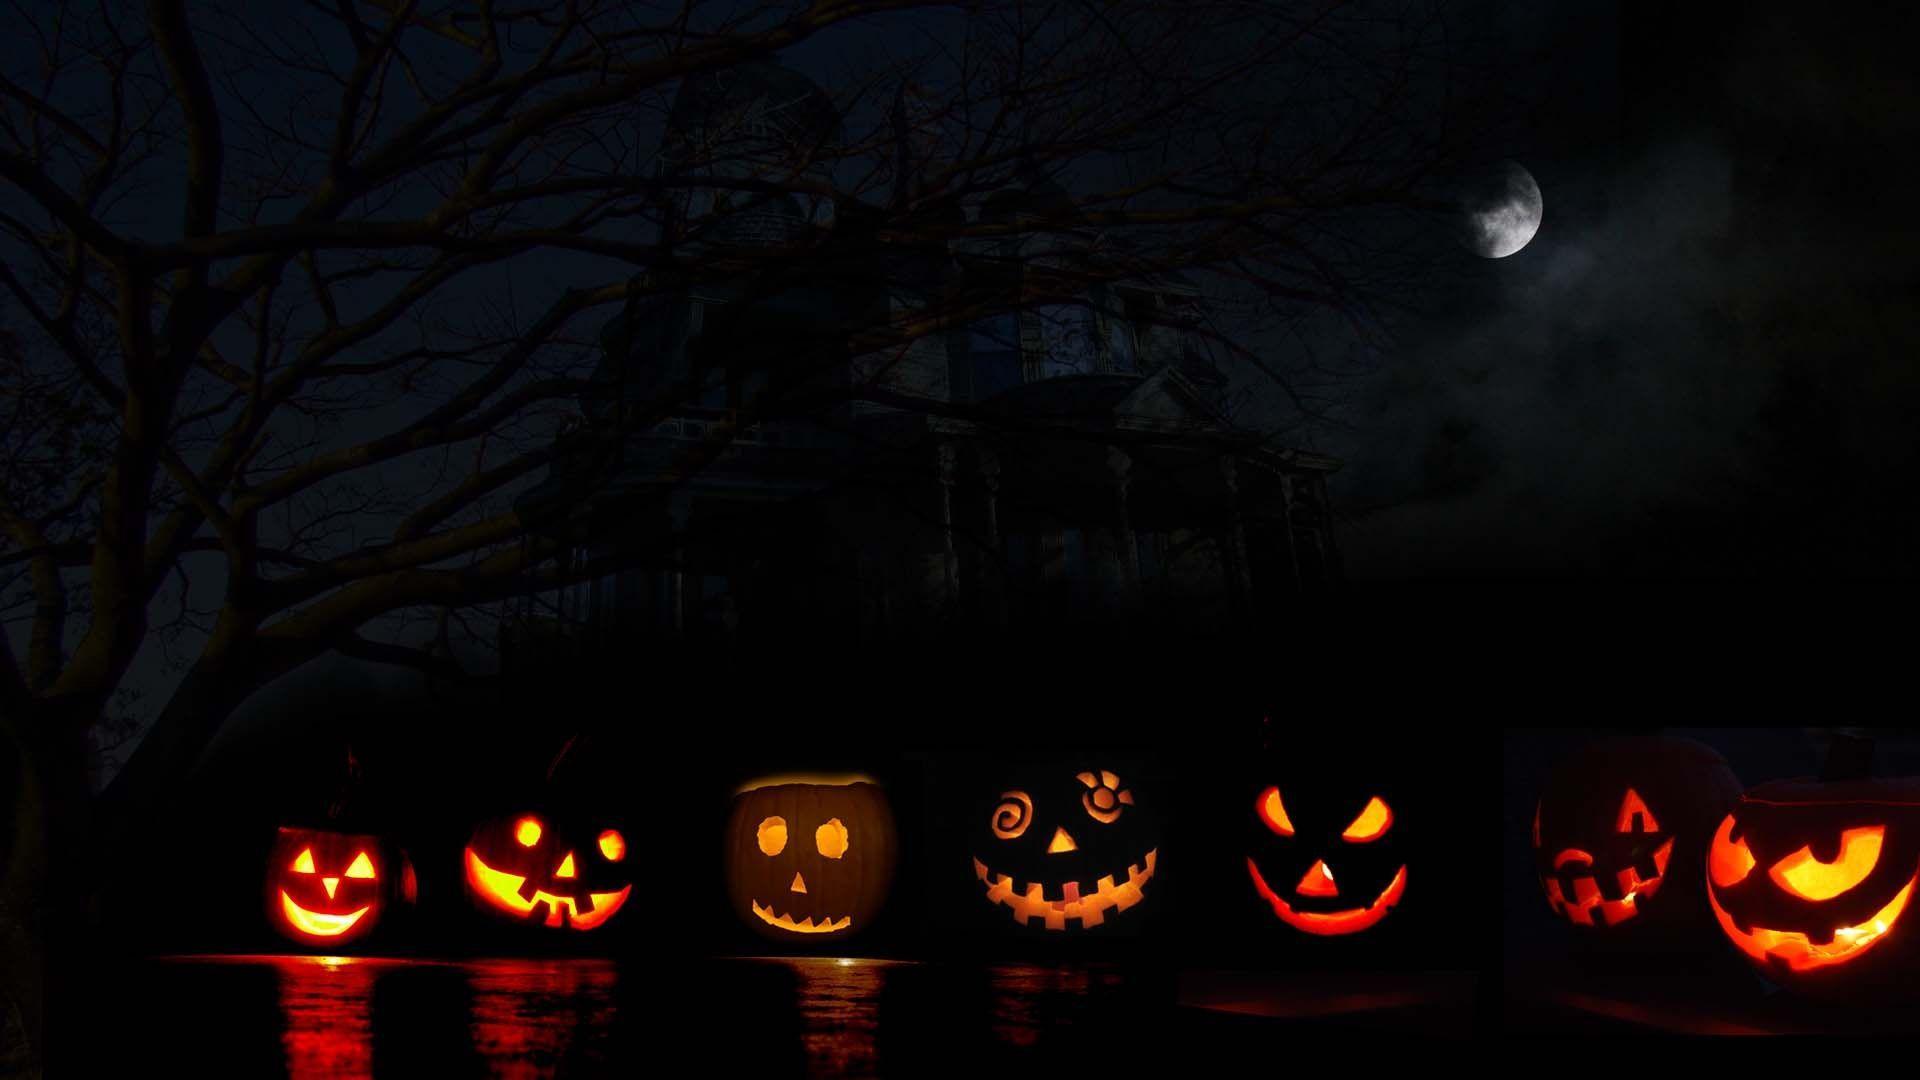 Free Animated Halloween Desktop Wallpaper Image 2014 HD